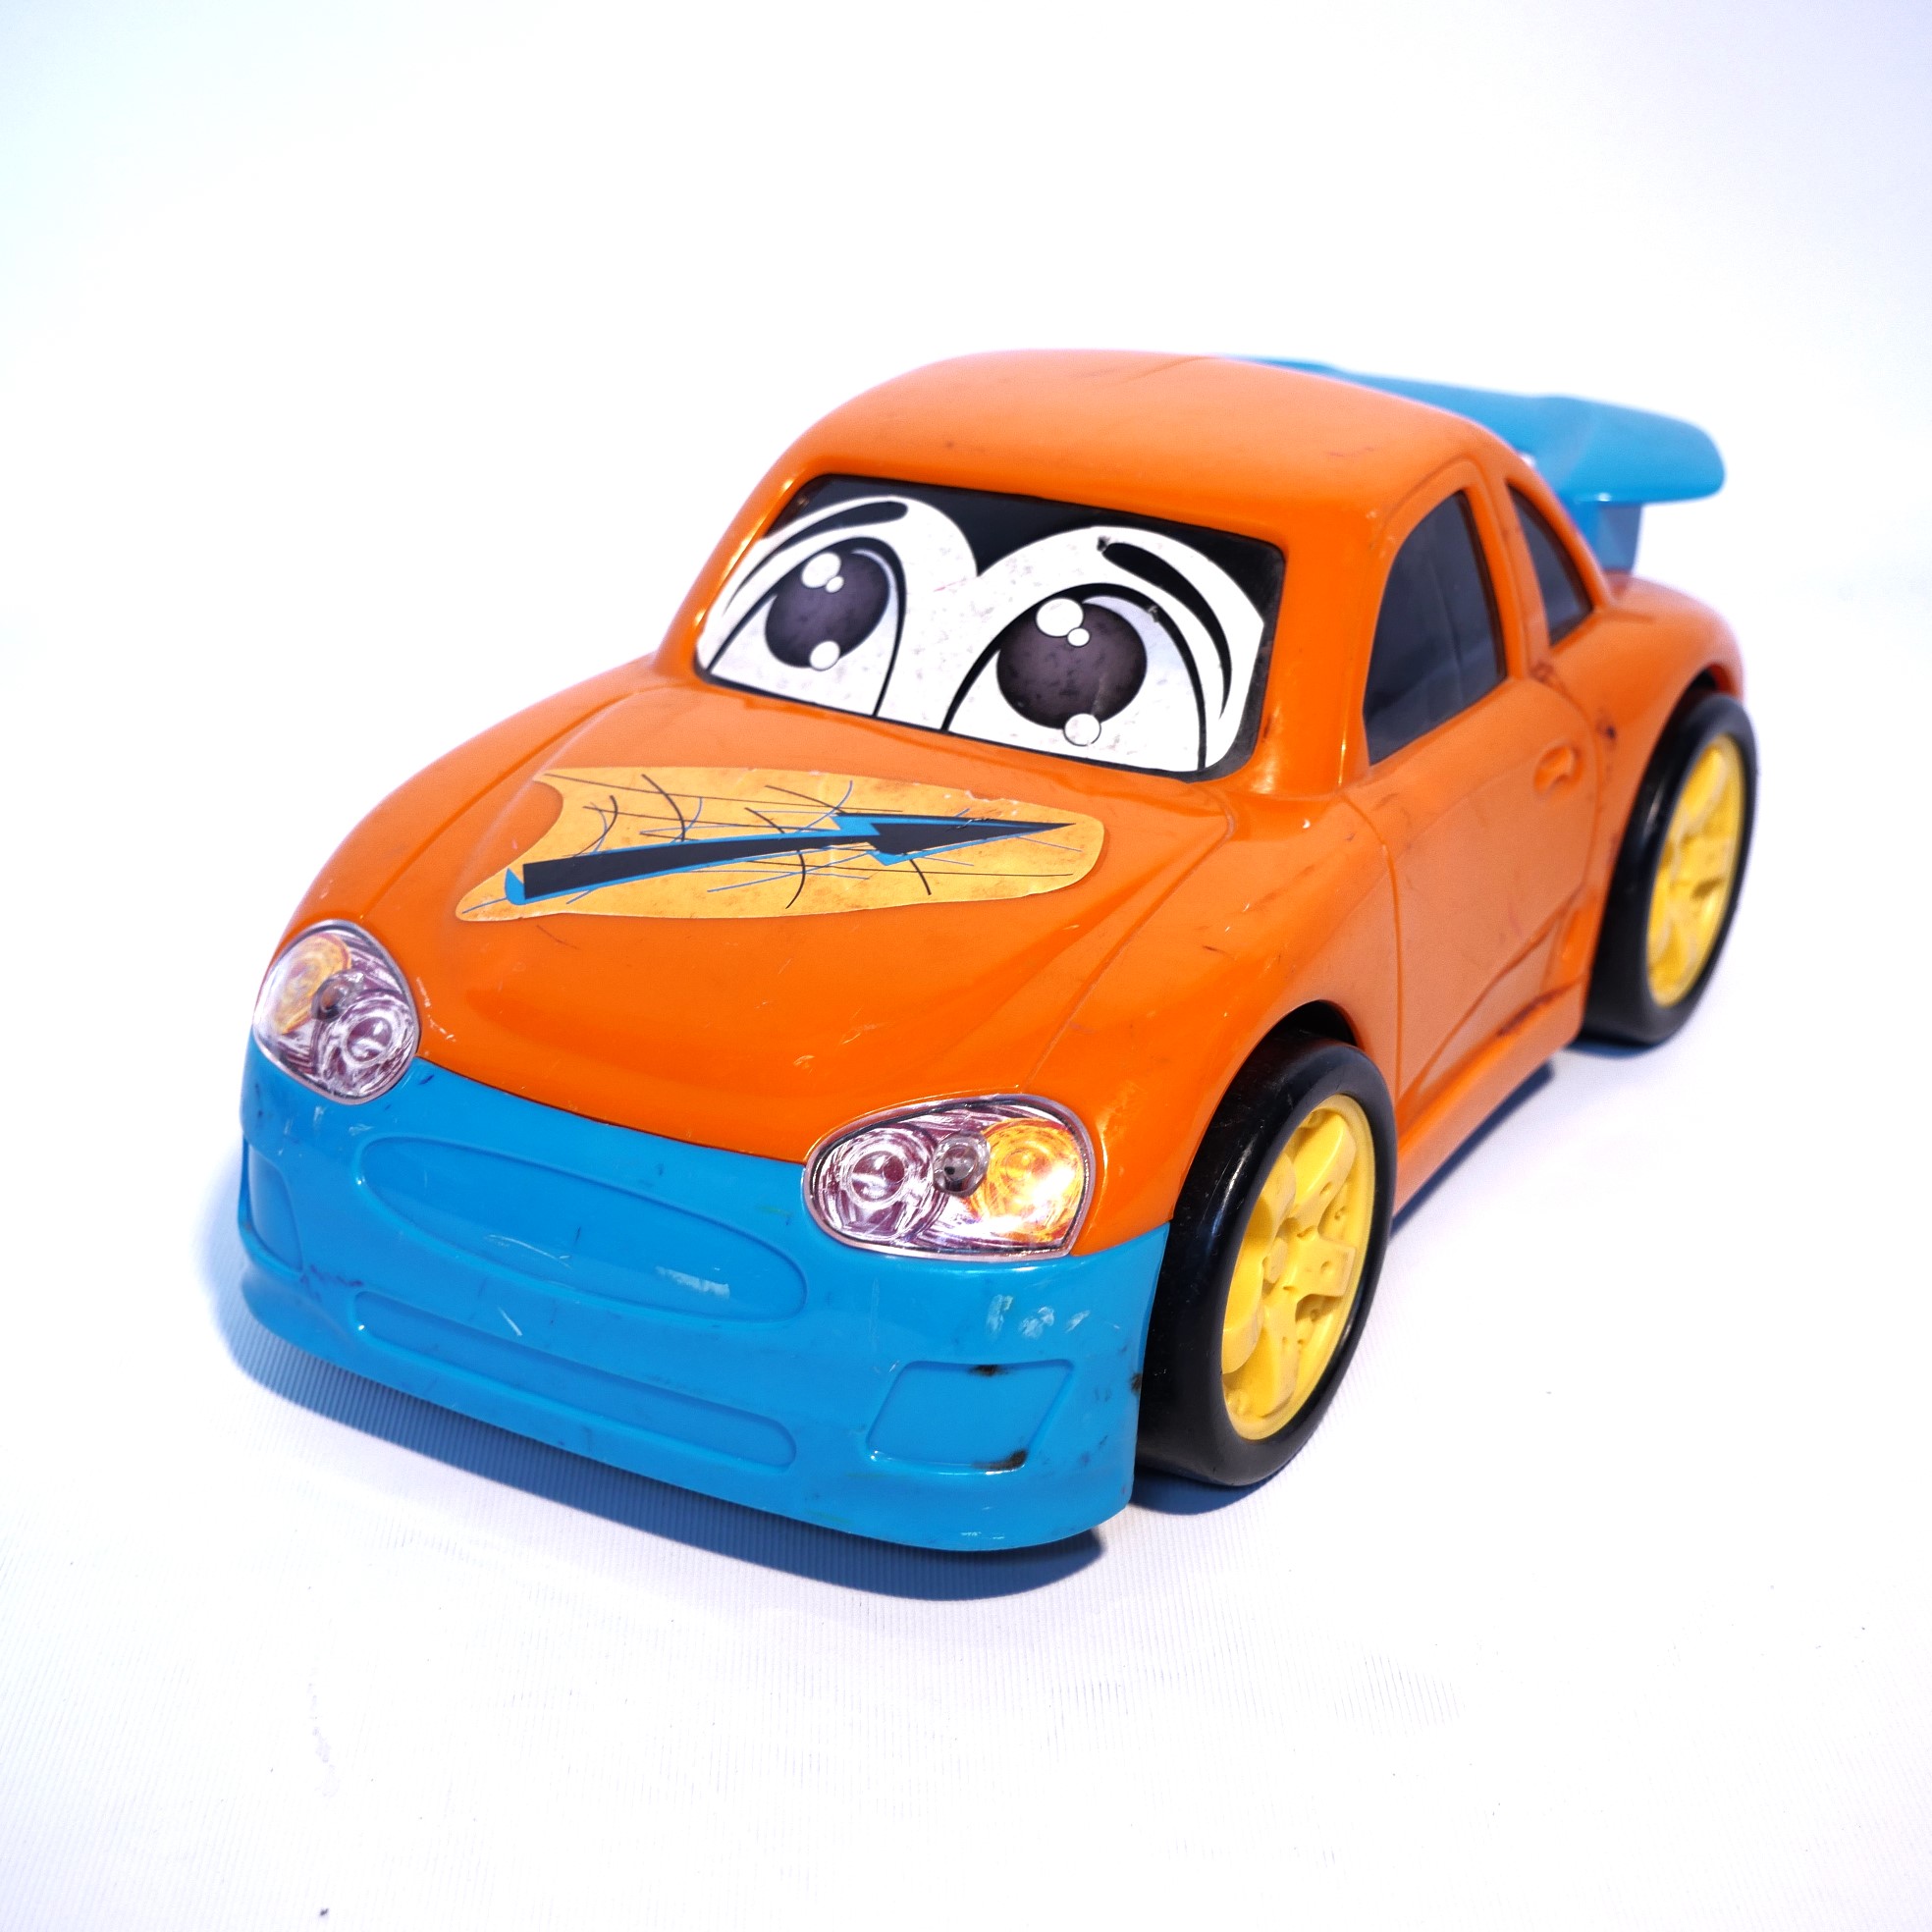 Voiture cars orange et bleu